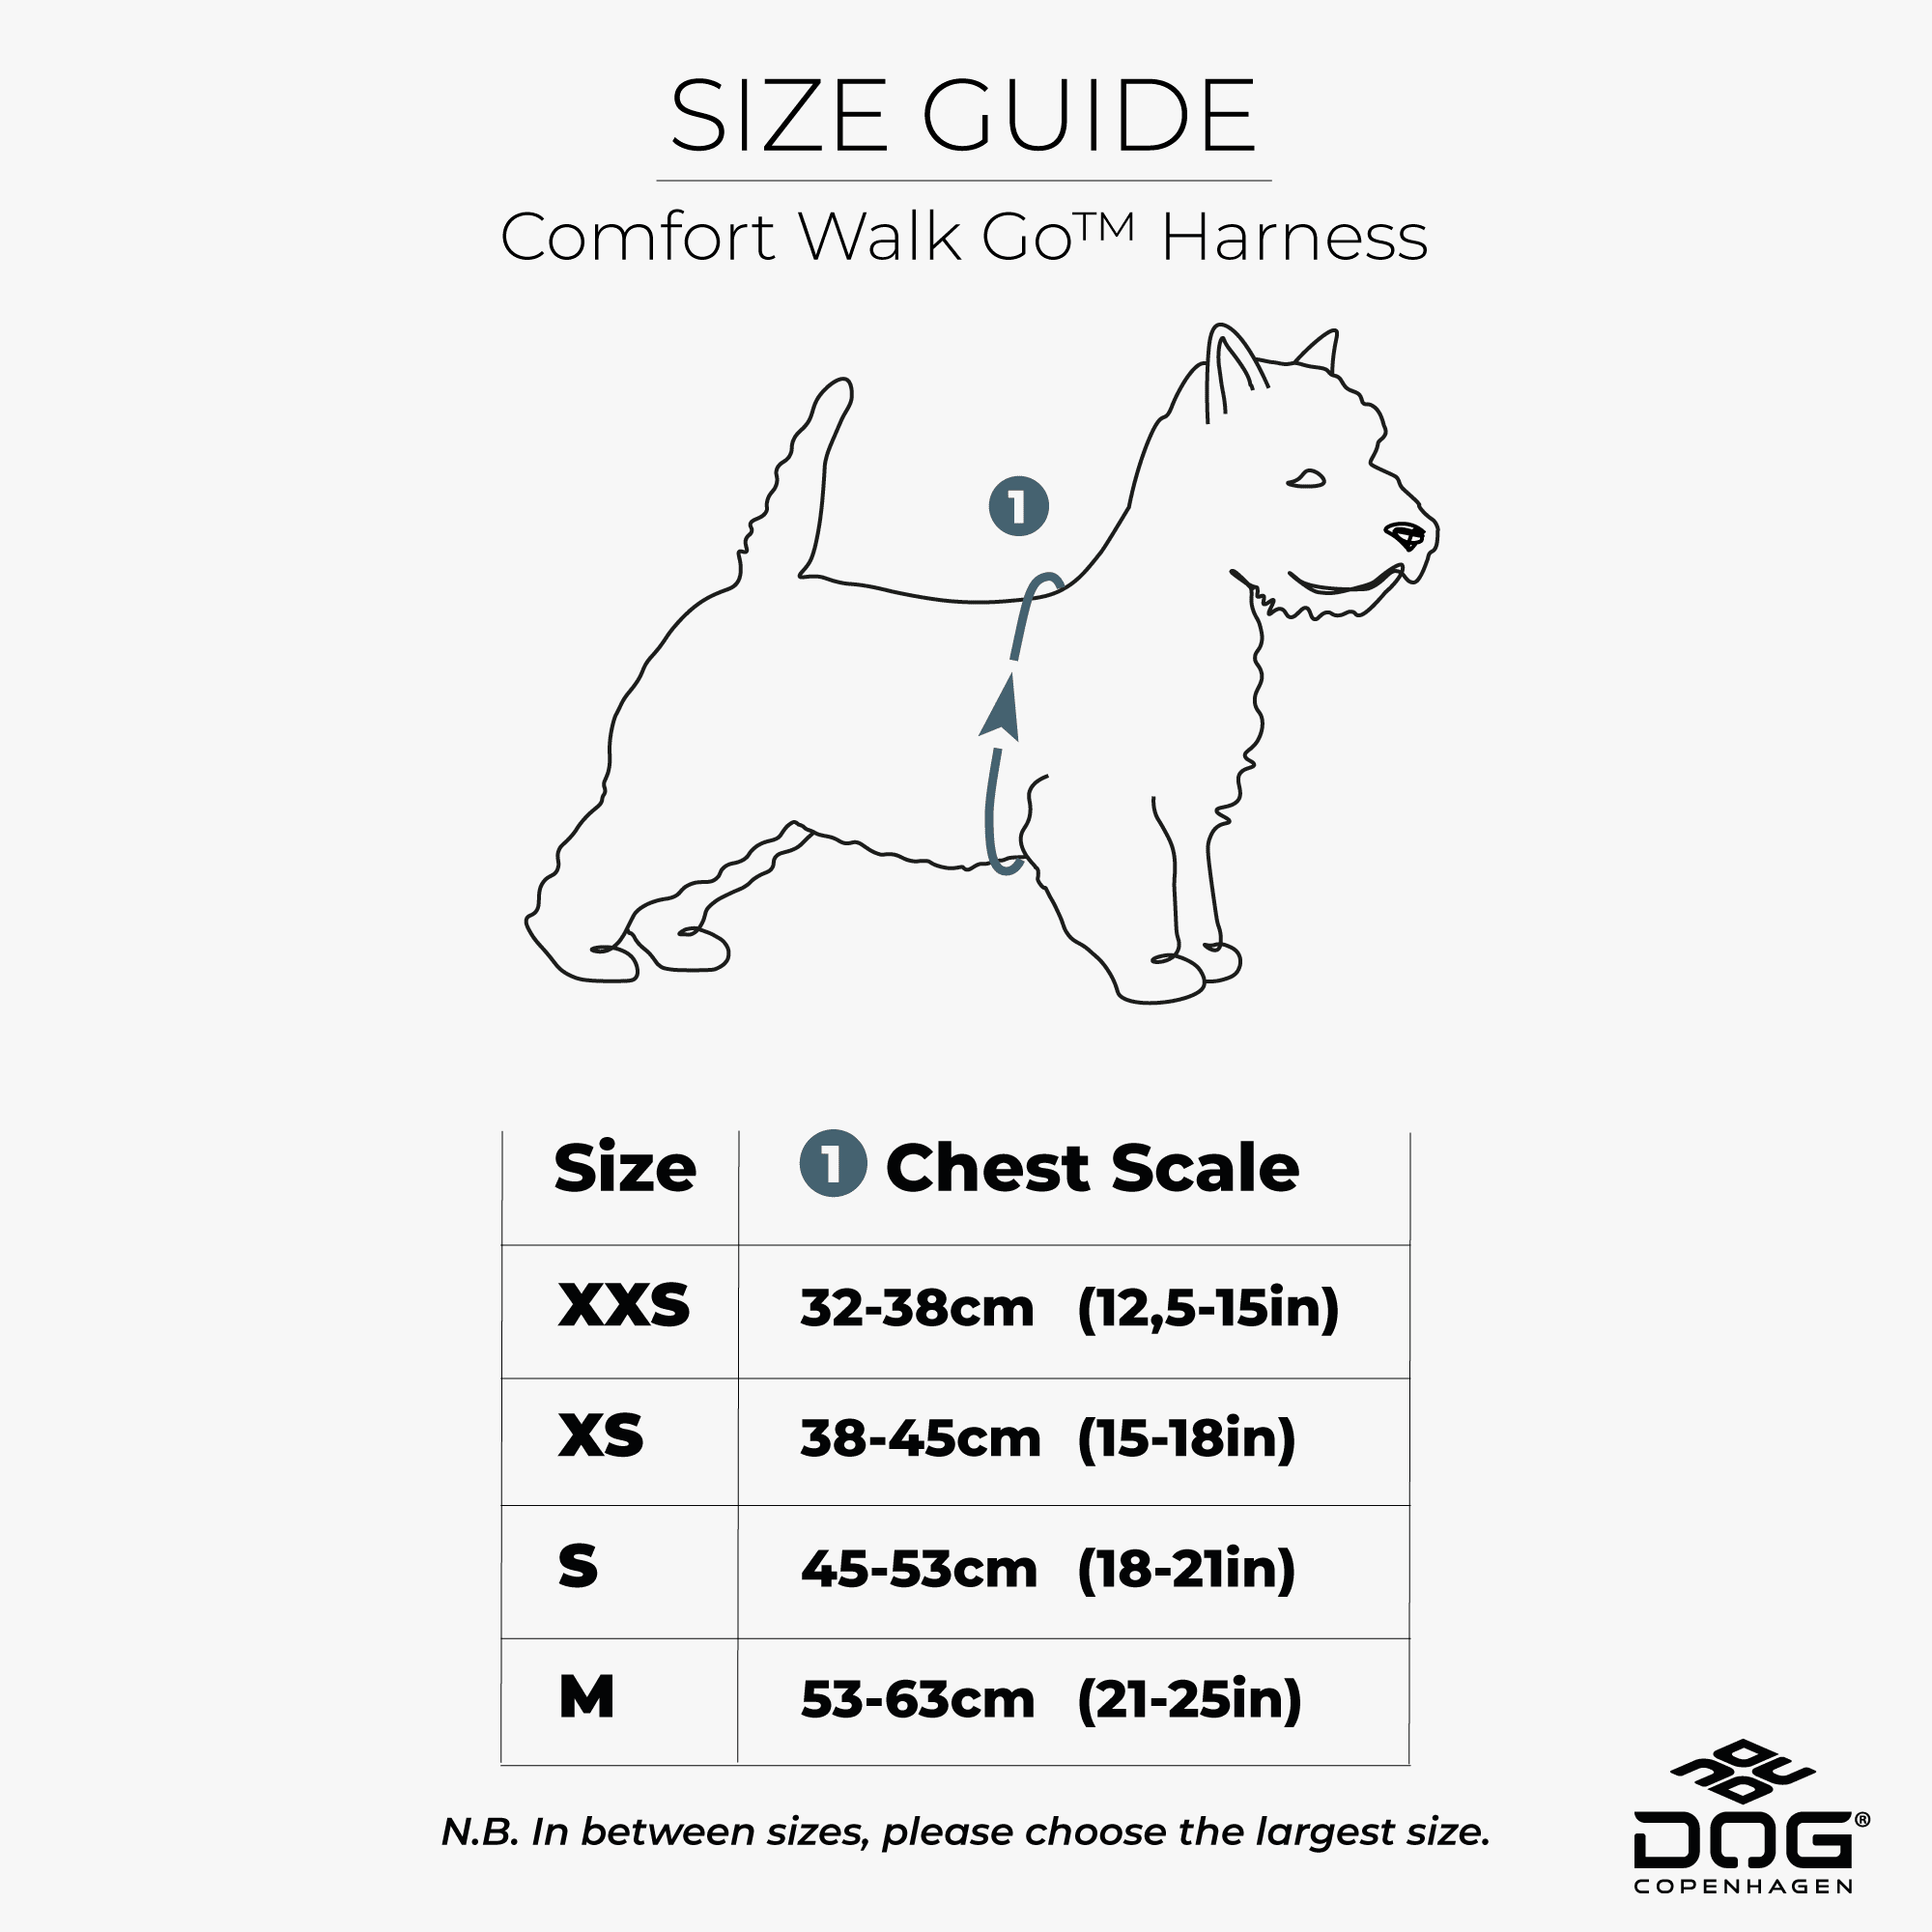 Size Guide - Comfort Walk GO harness